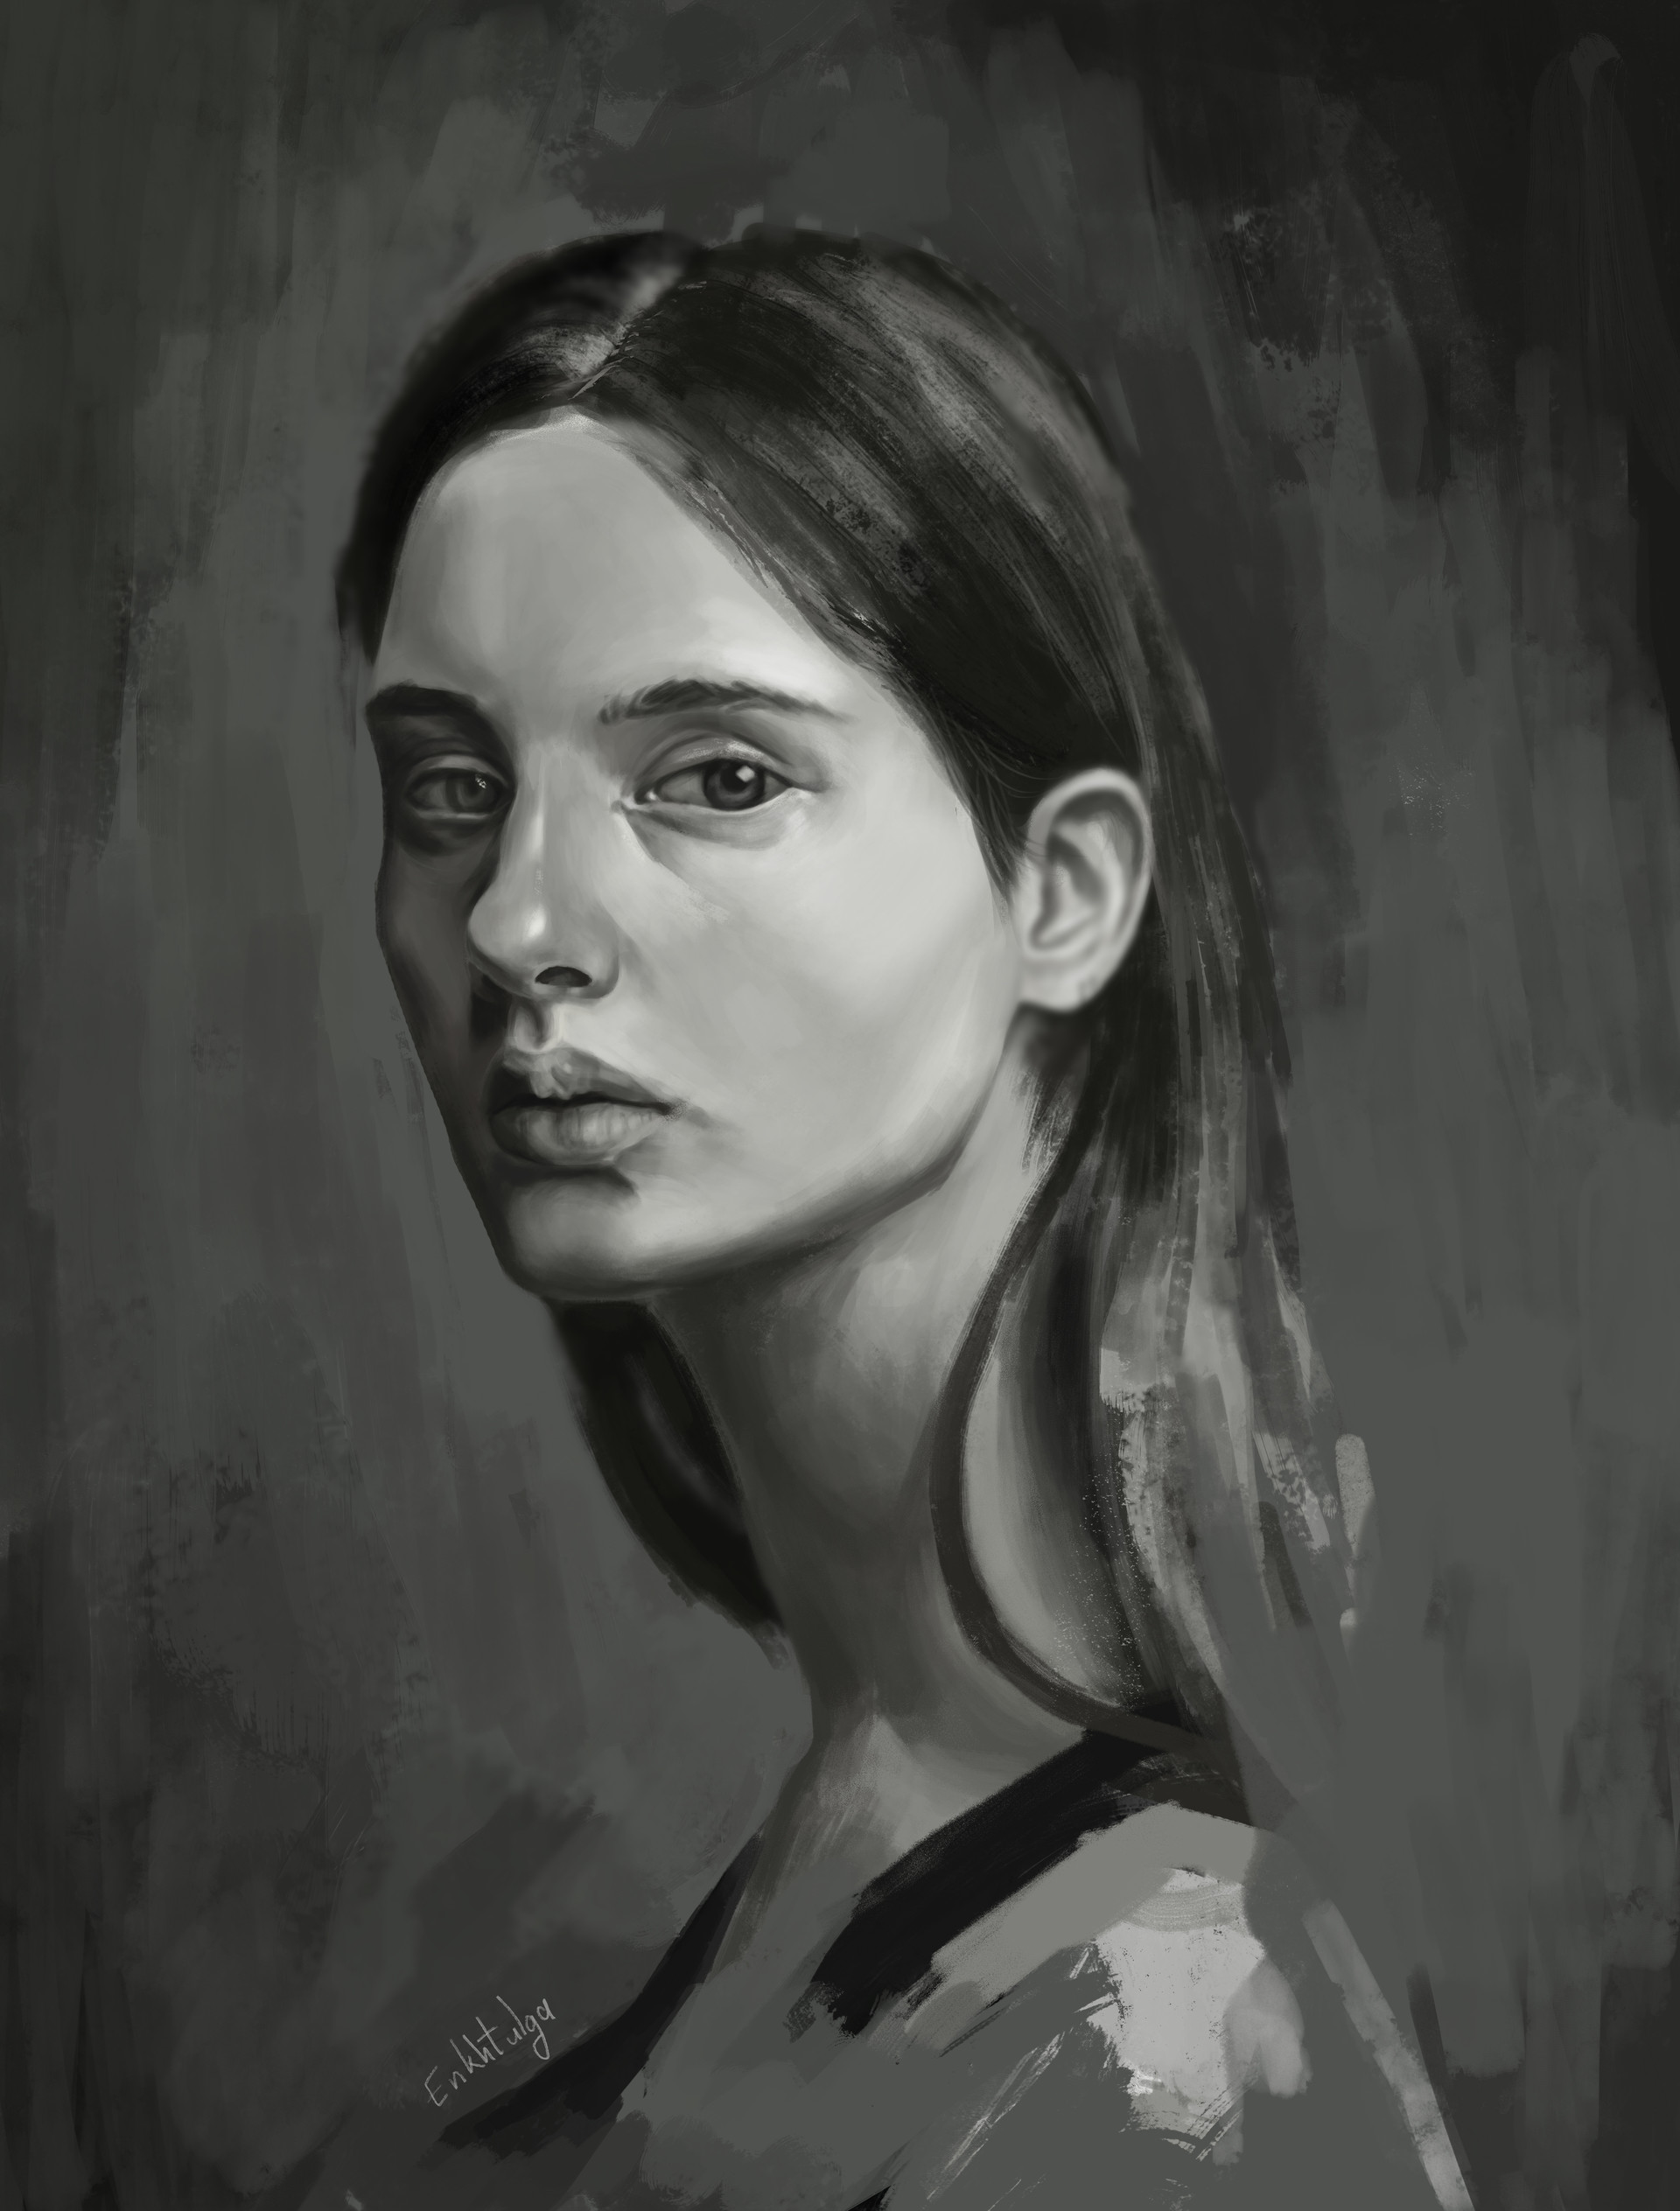 ArtStation - Portrait study